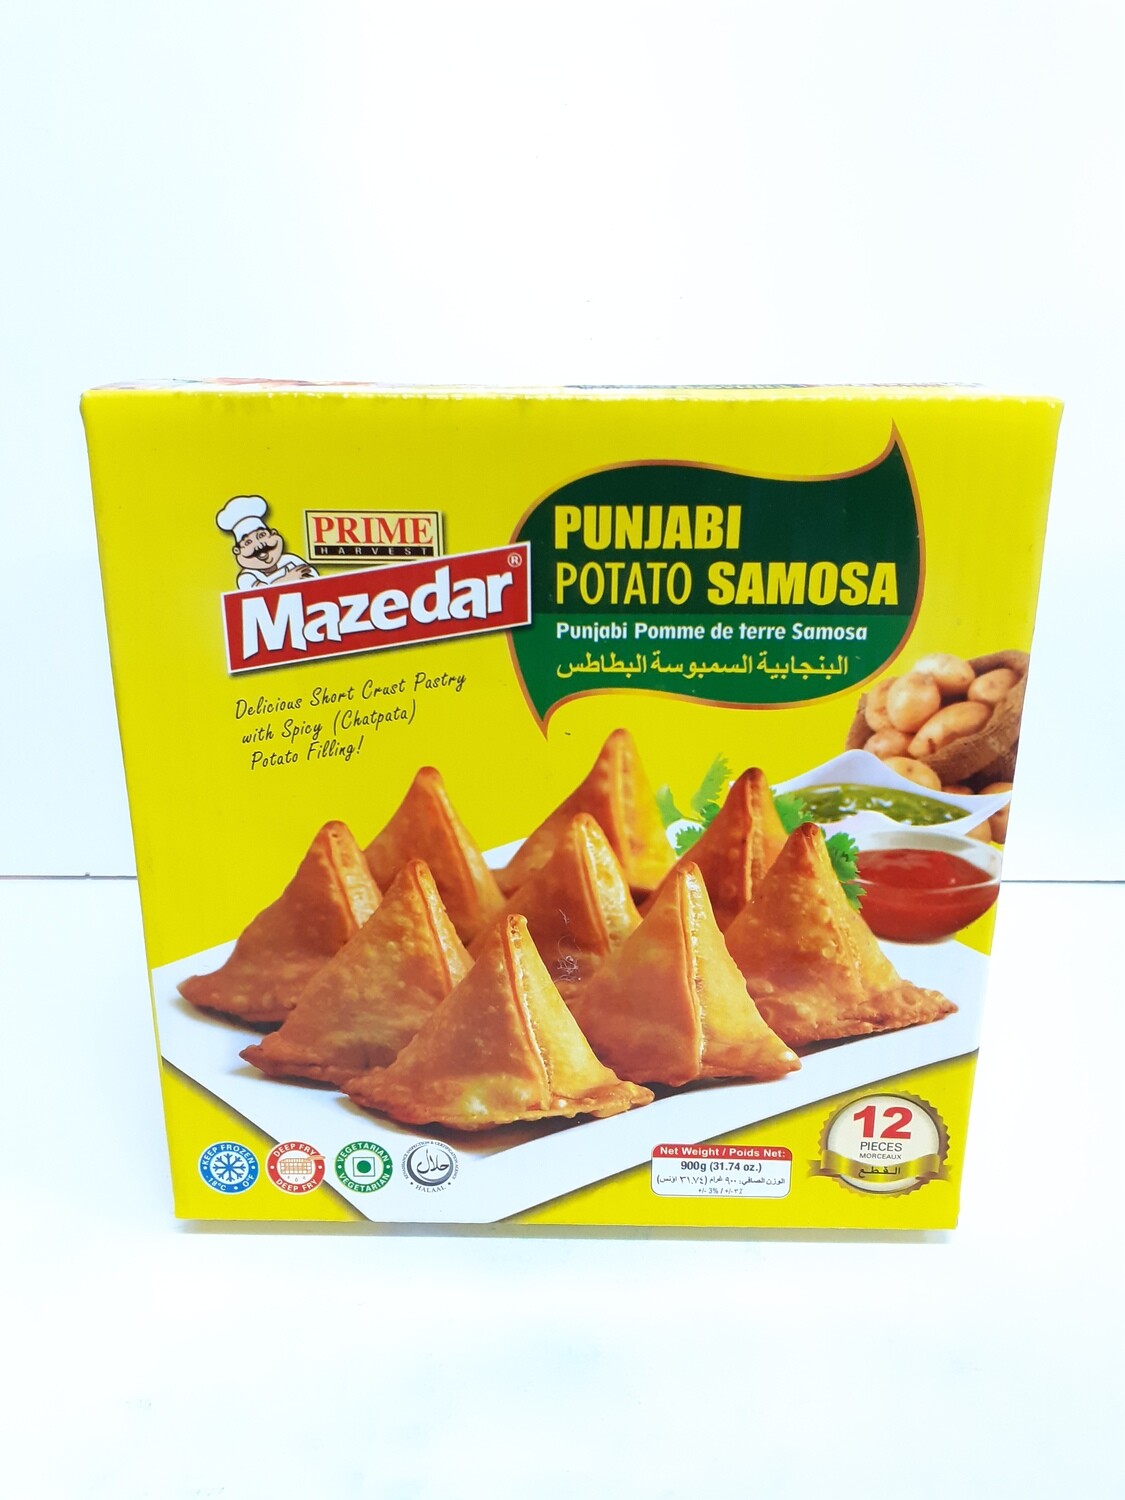 Punjabi Patato Samosa MAZEDAR PRIME 900 g